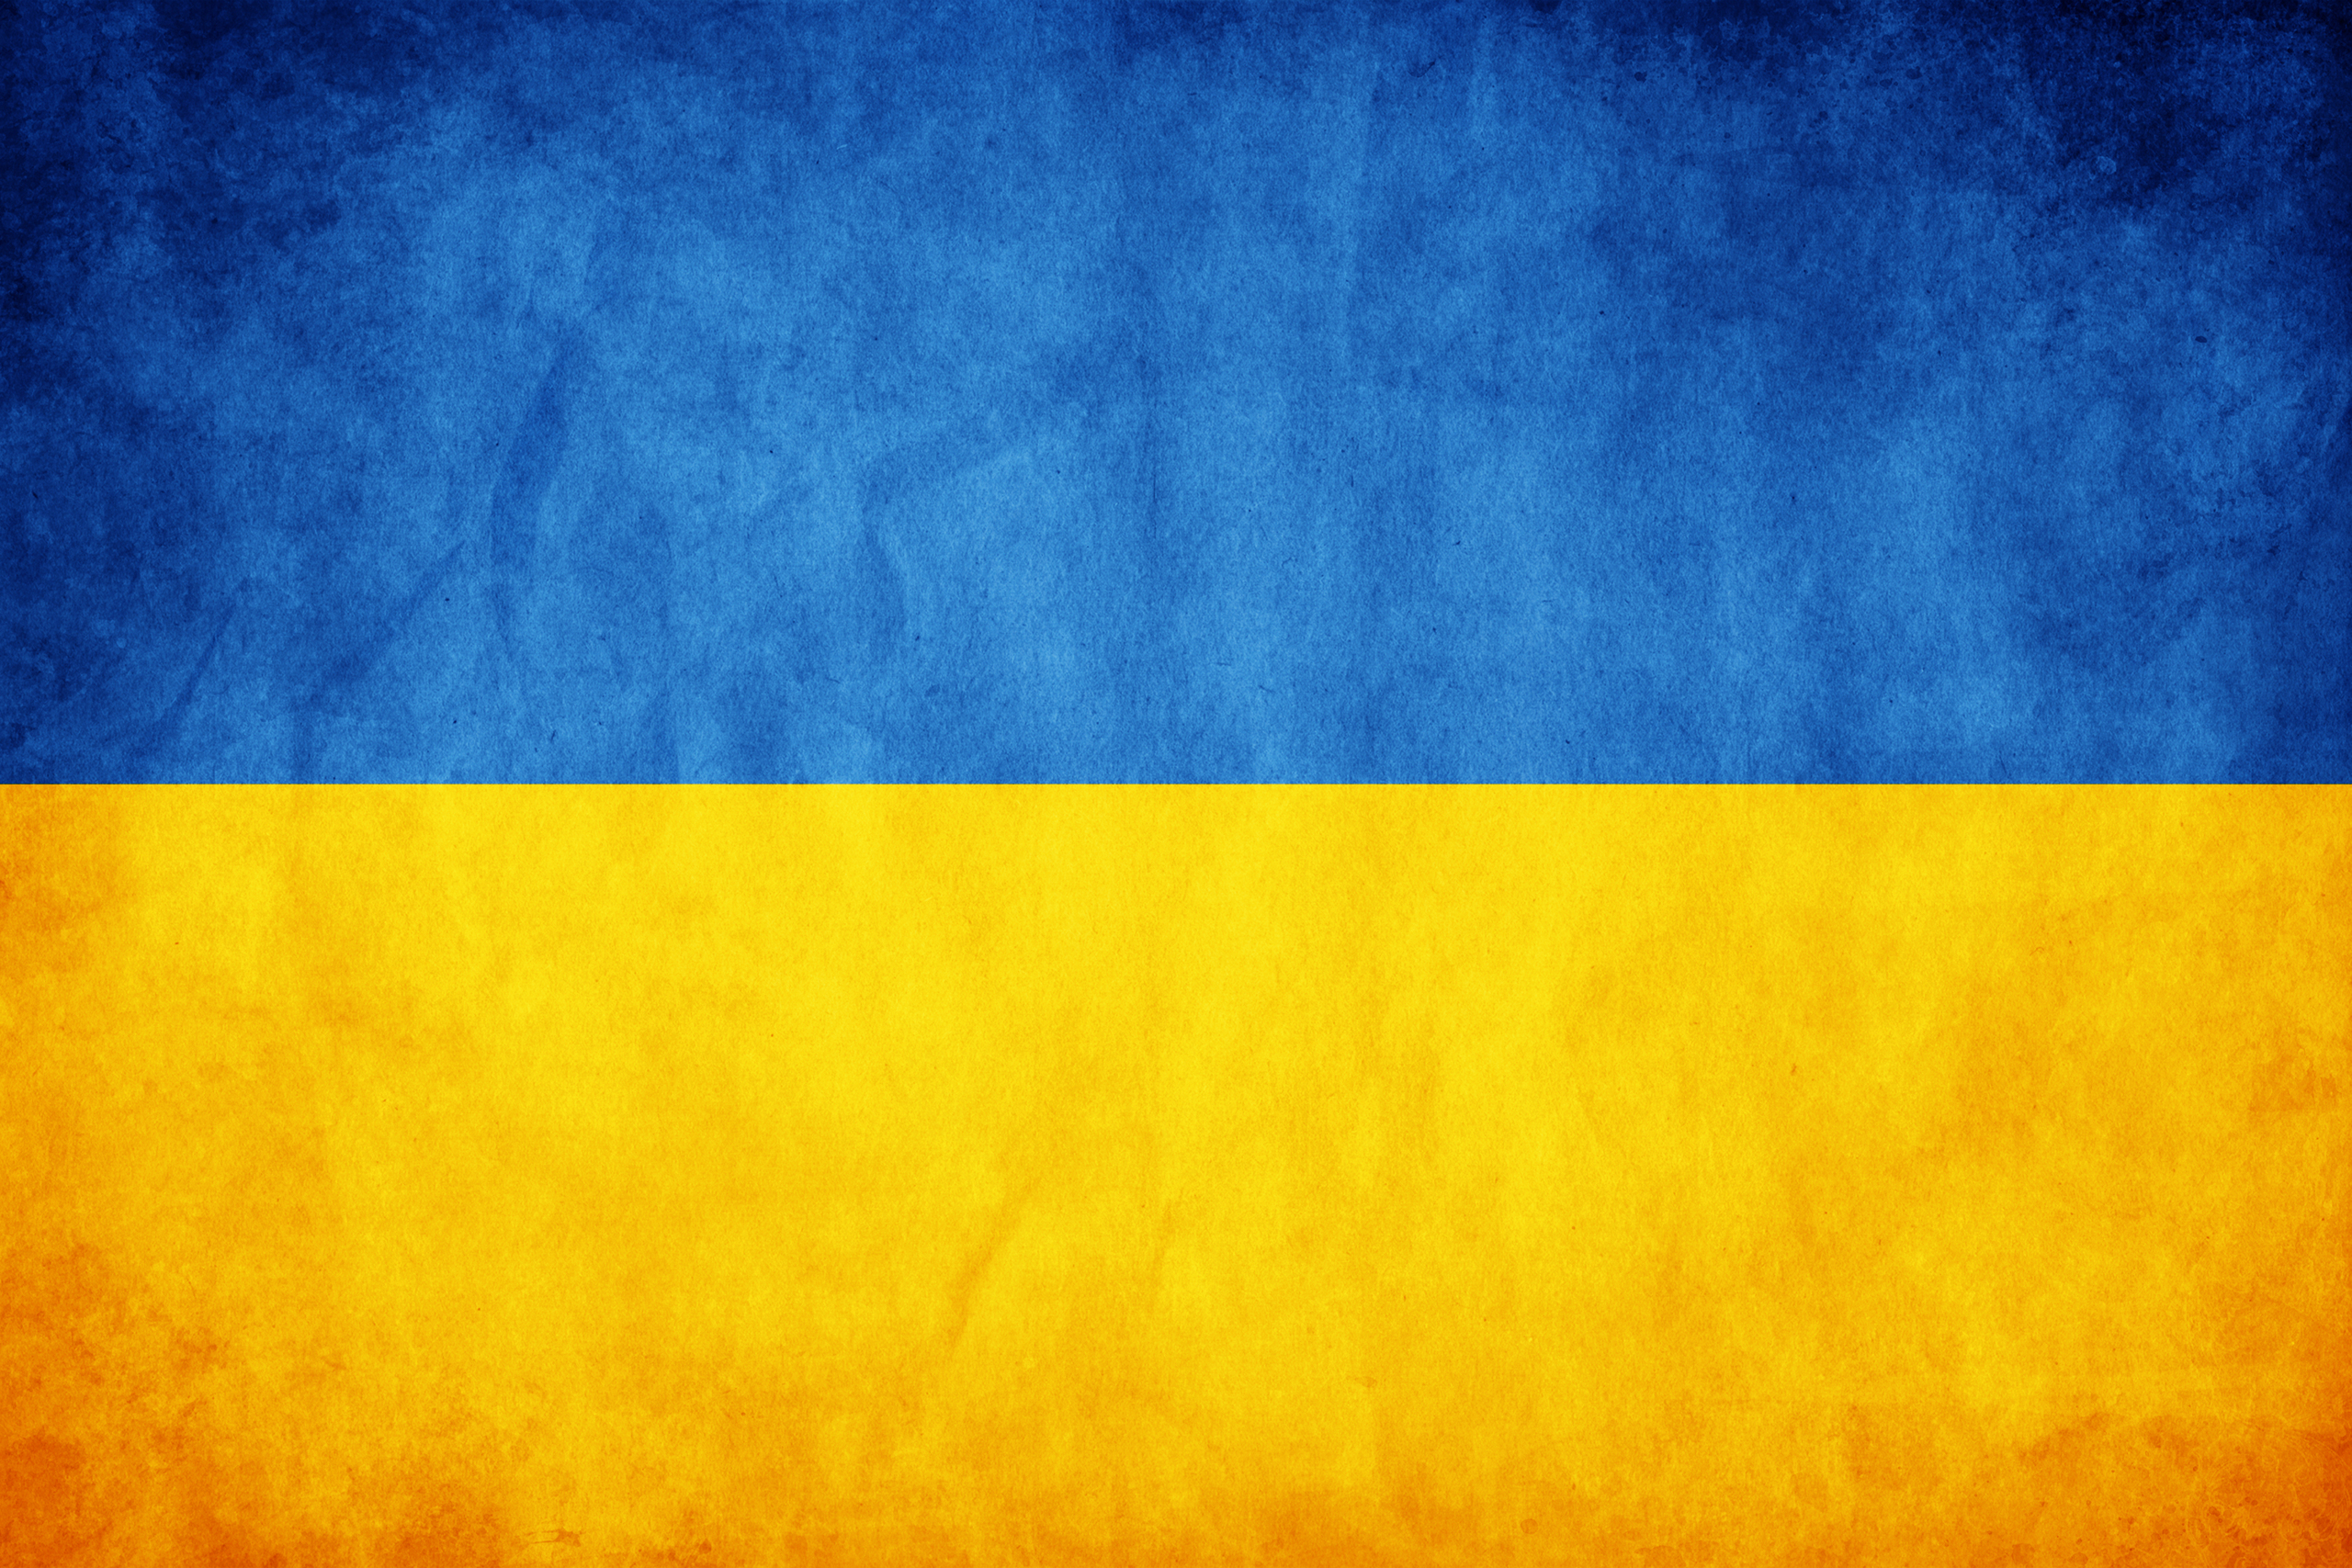 Ukraine Image Ukrainian Flag HD Wallpaper And Background Photos